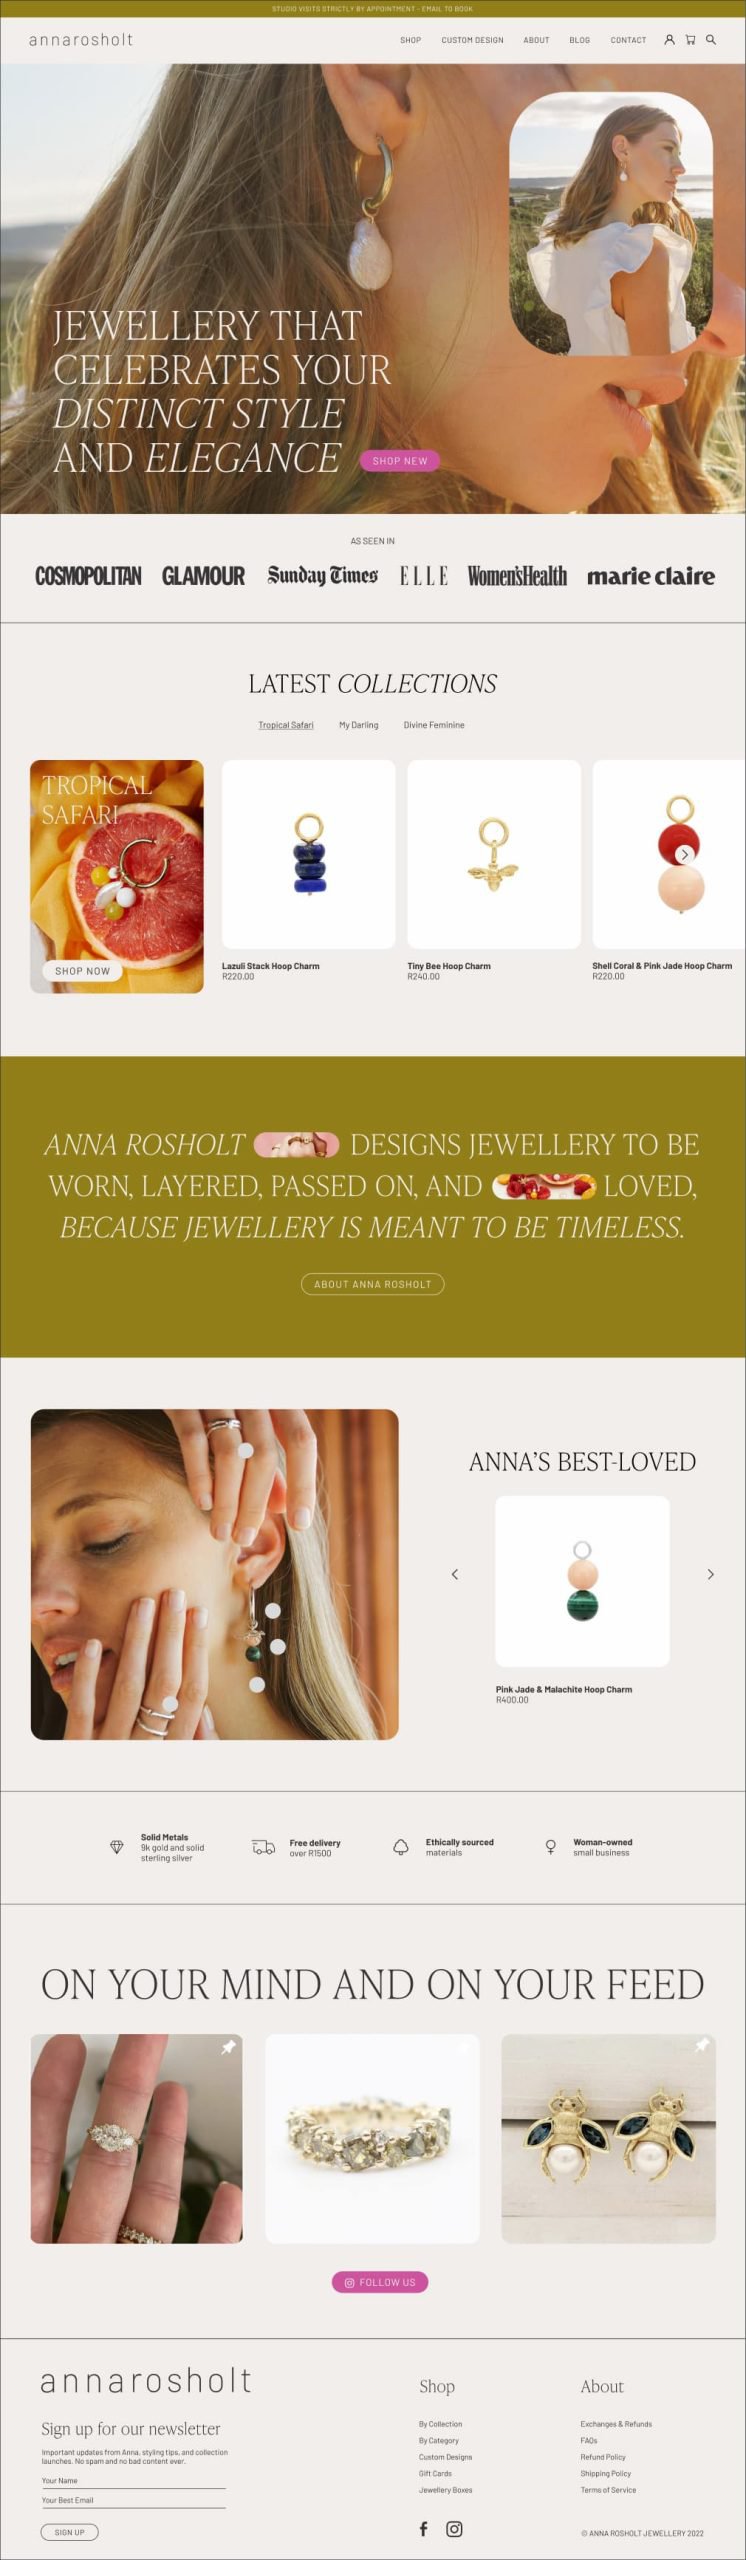 Anna Rosholt Jewellery Digital Butter Portfolio 08 Website scaled